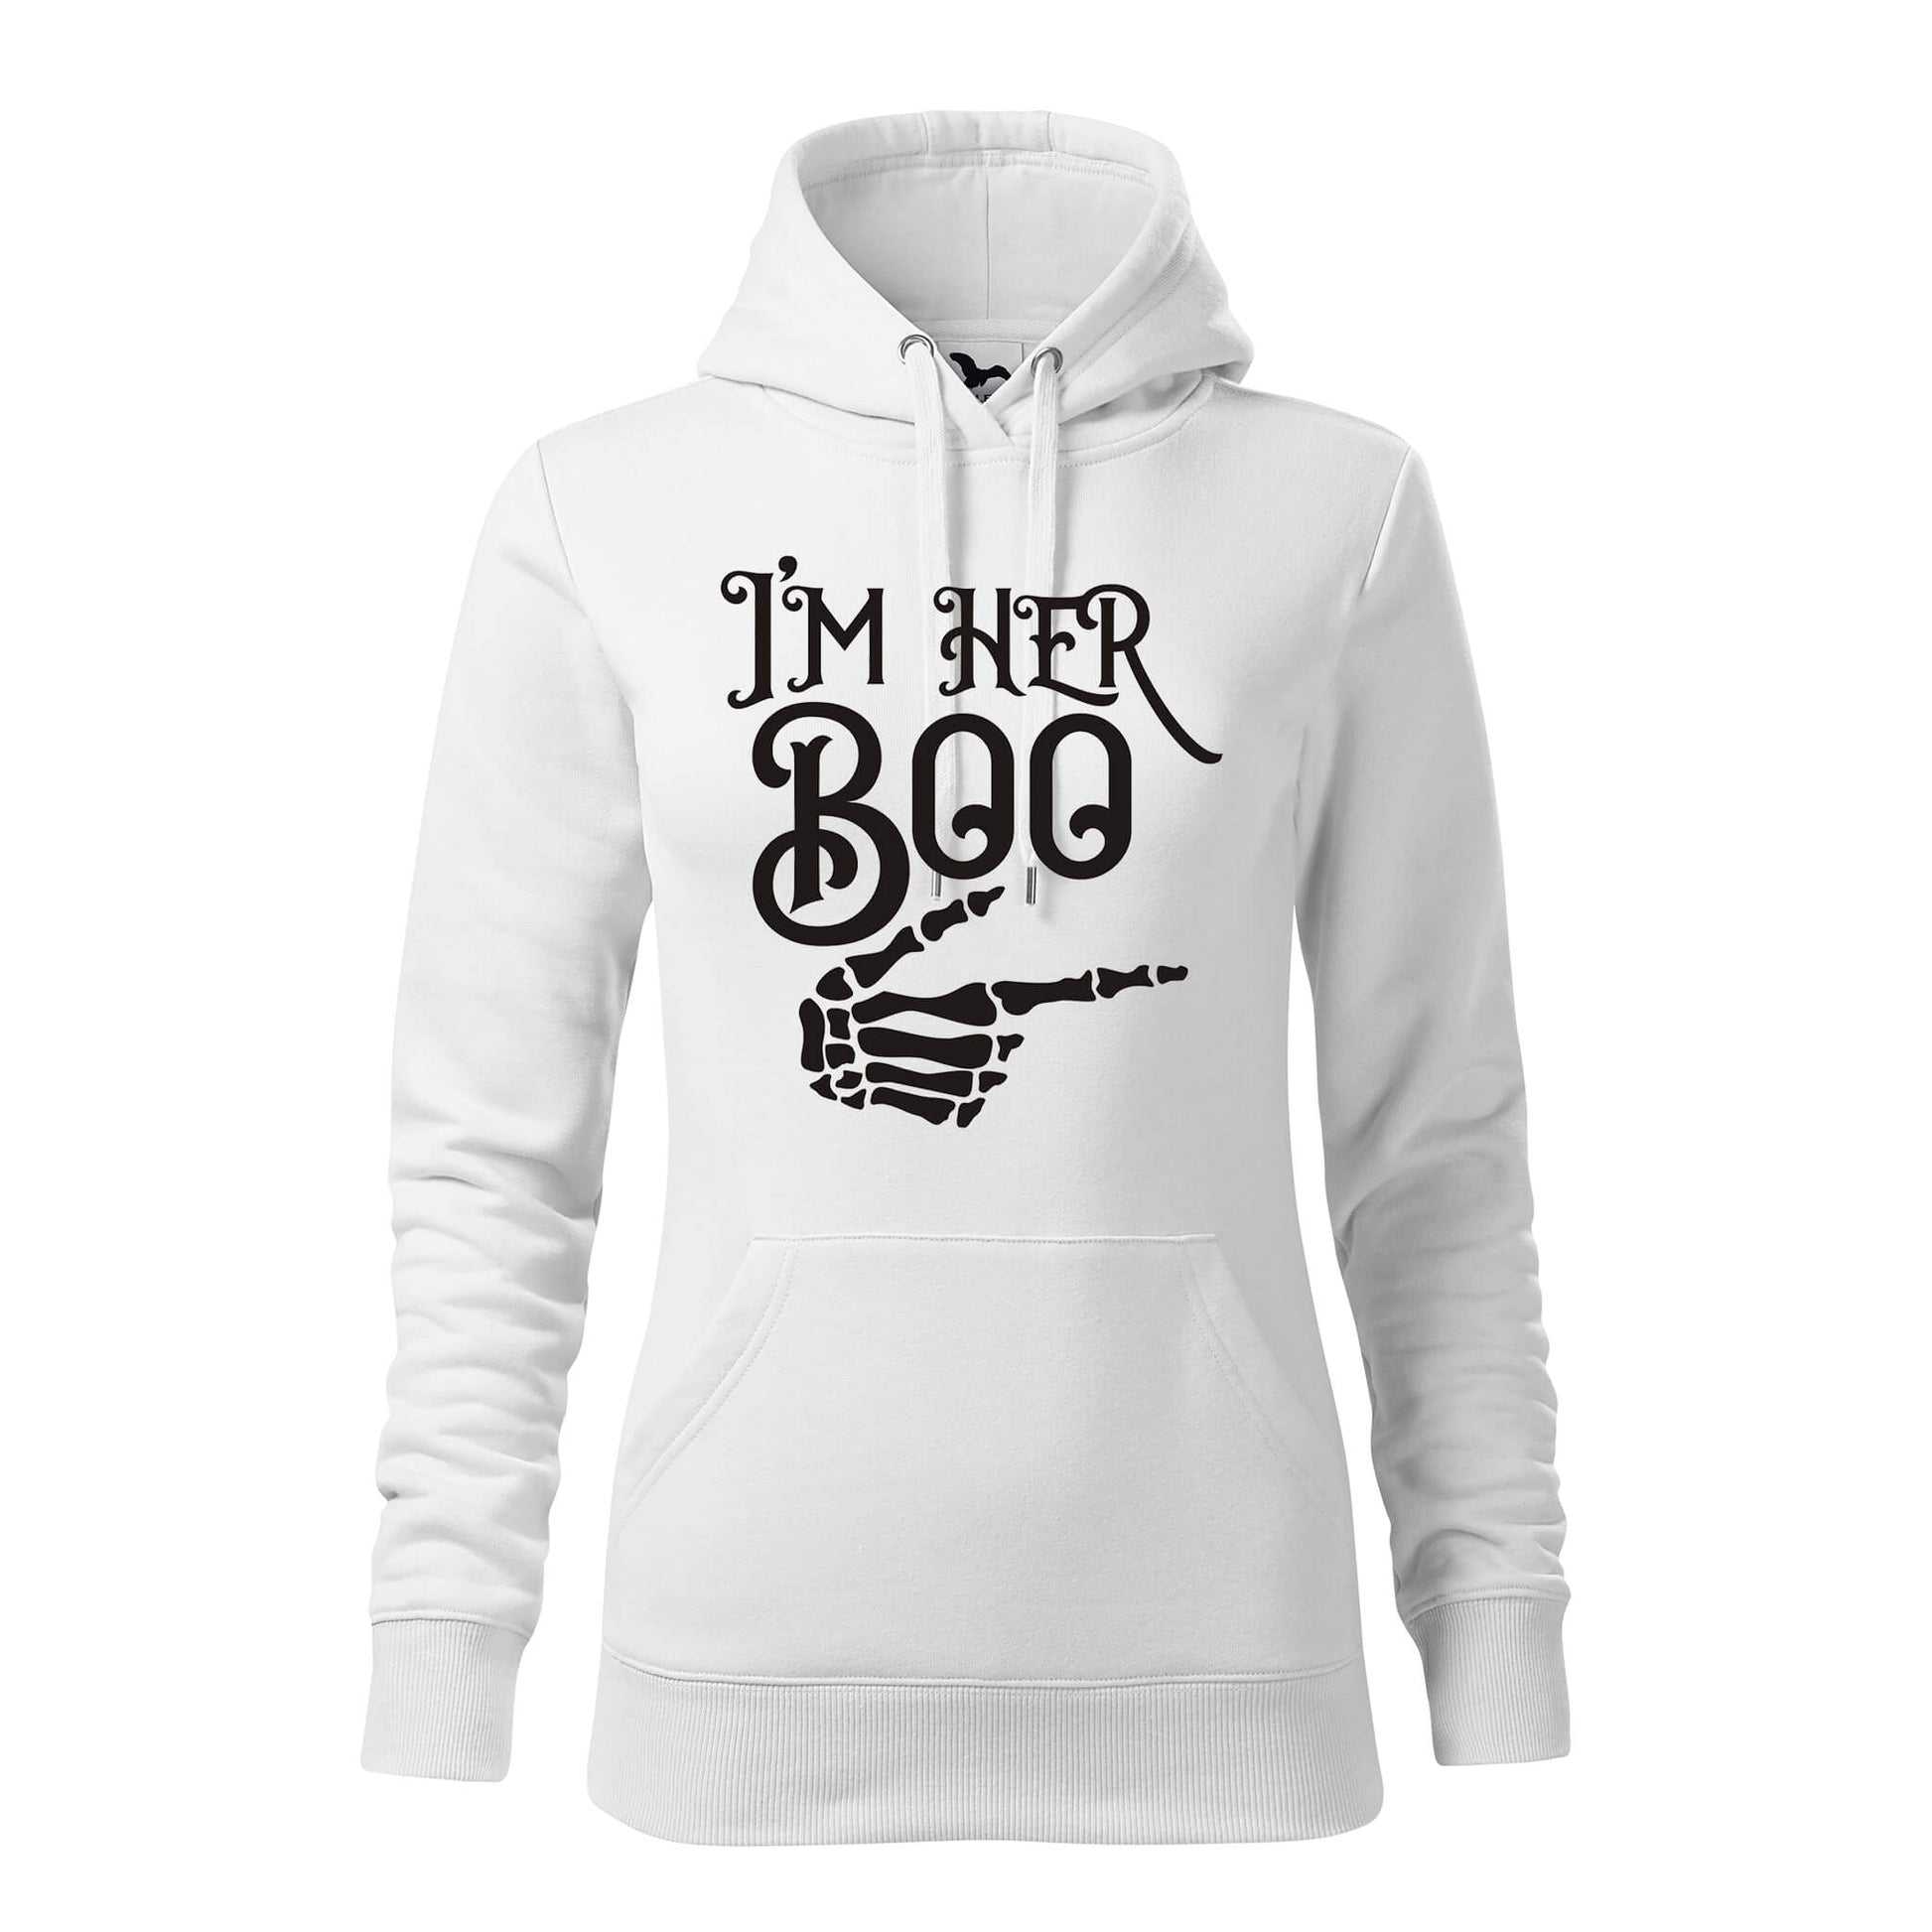 Im her boo hoodie - rvdesignprint